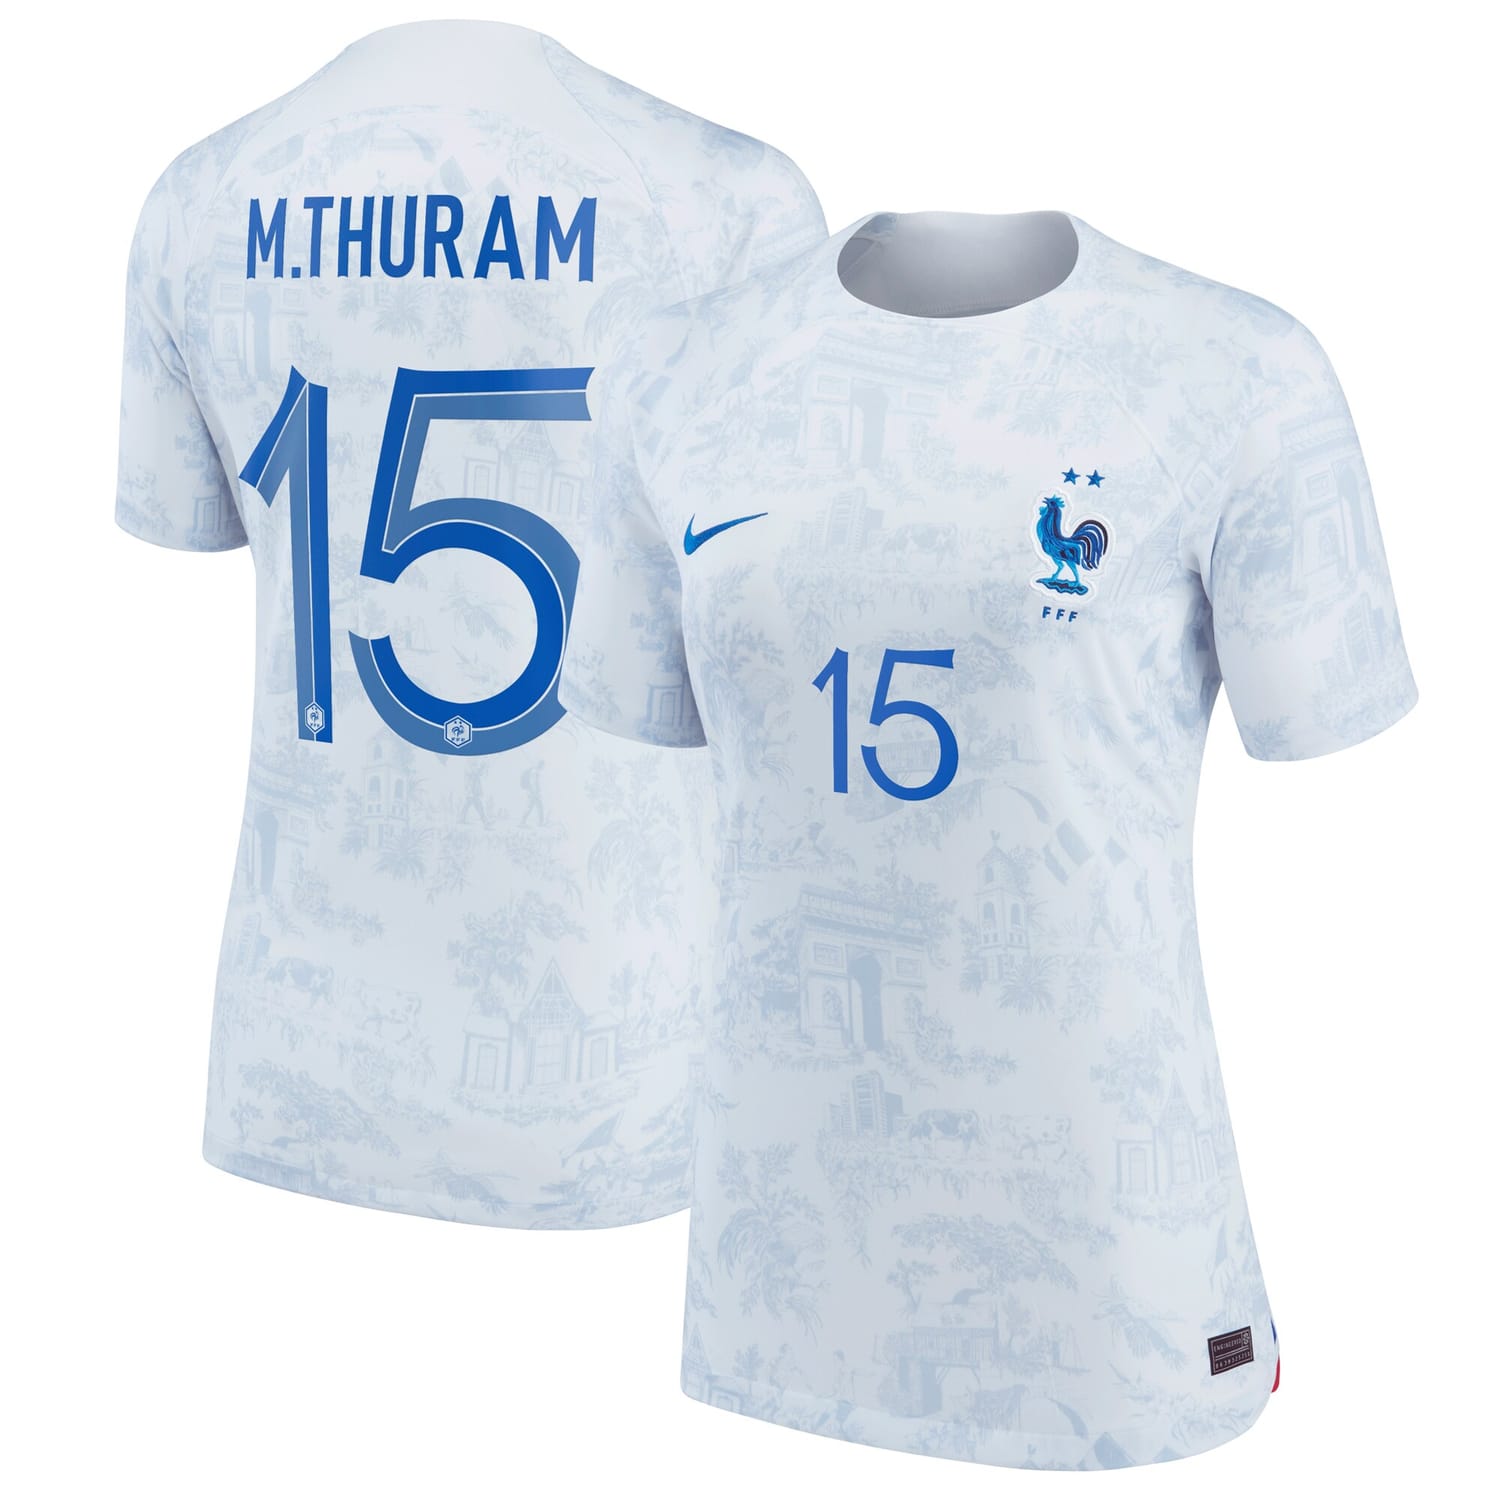 France National Team Away Jersey Shirt 2022 player Marcus Thuram 15 printing for Women